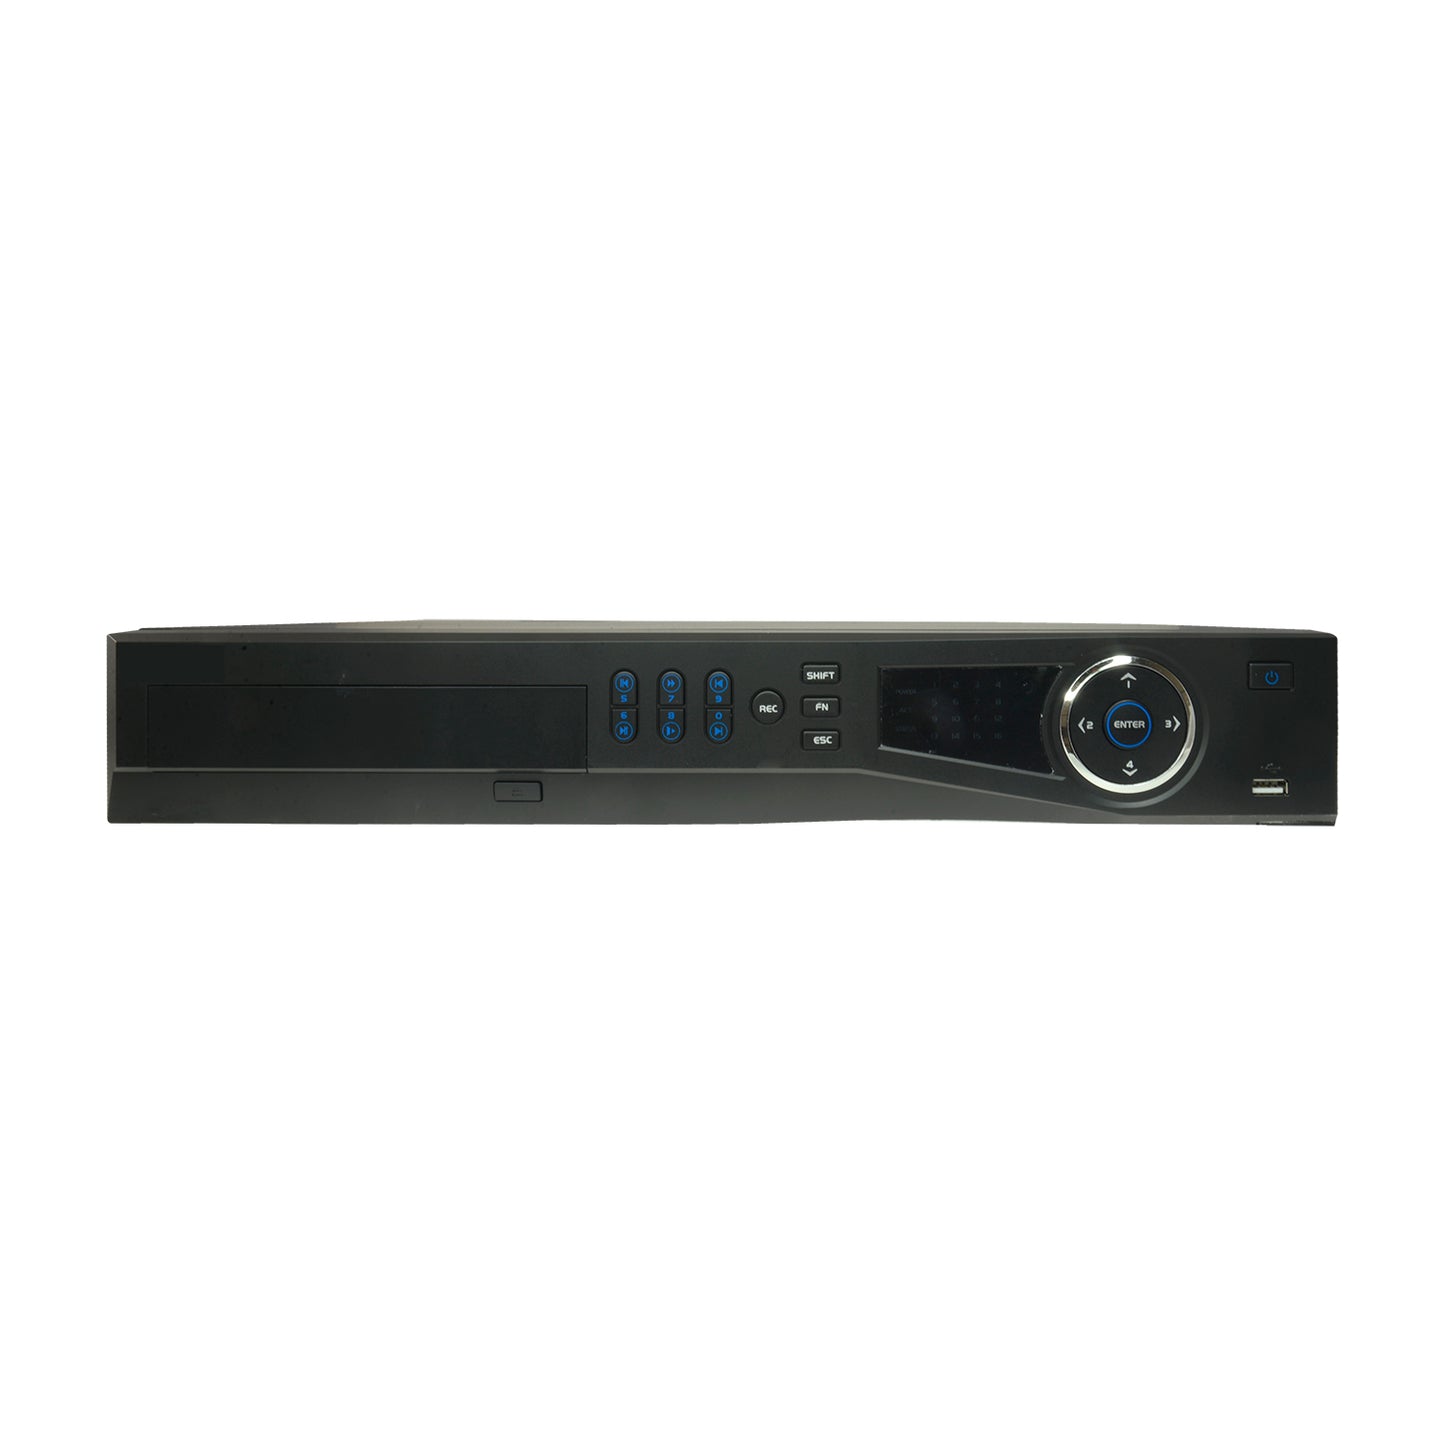 HDCVI/CVBS/IP Universal Recorder - 8 CH video / 8 IP / 4 CH audio - 1080P (25FPS) - Alarm Input / Output - BNC, VGA and HDMI Full HD output - Admits 4 hard disks